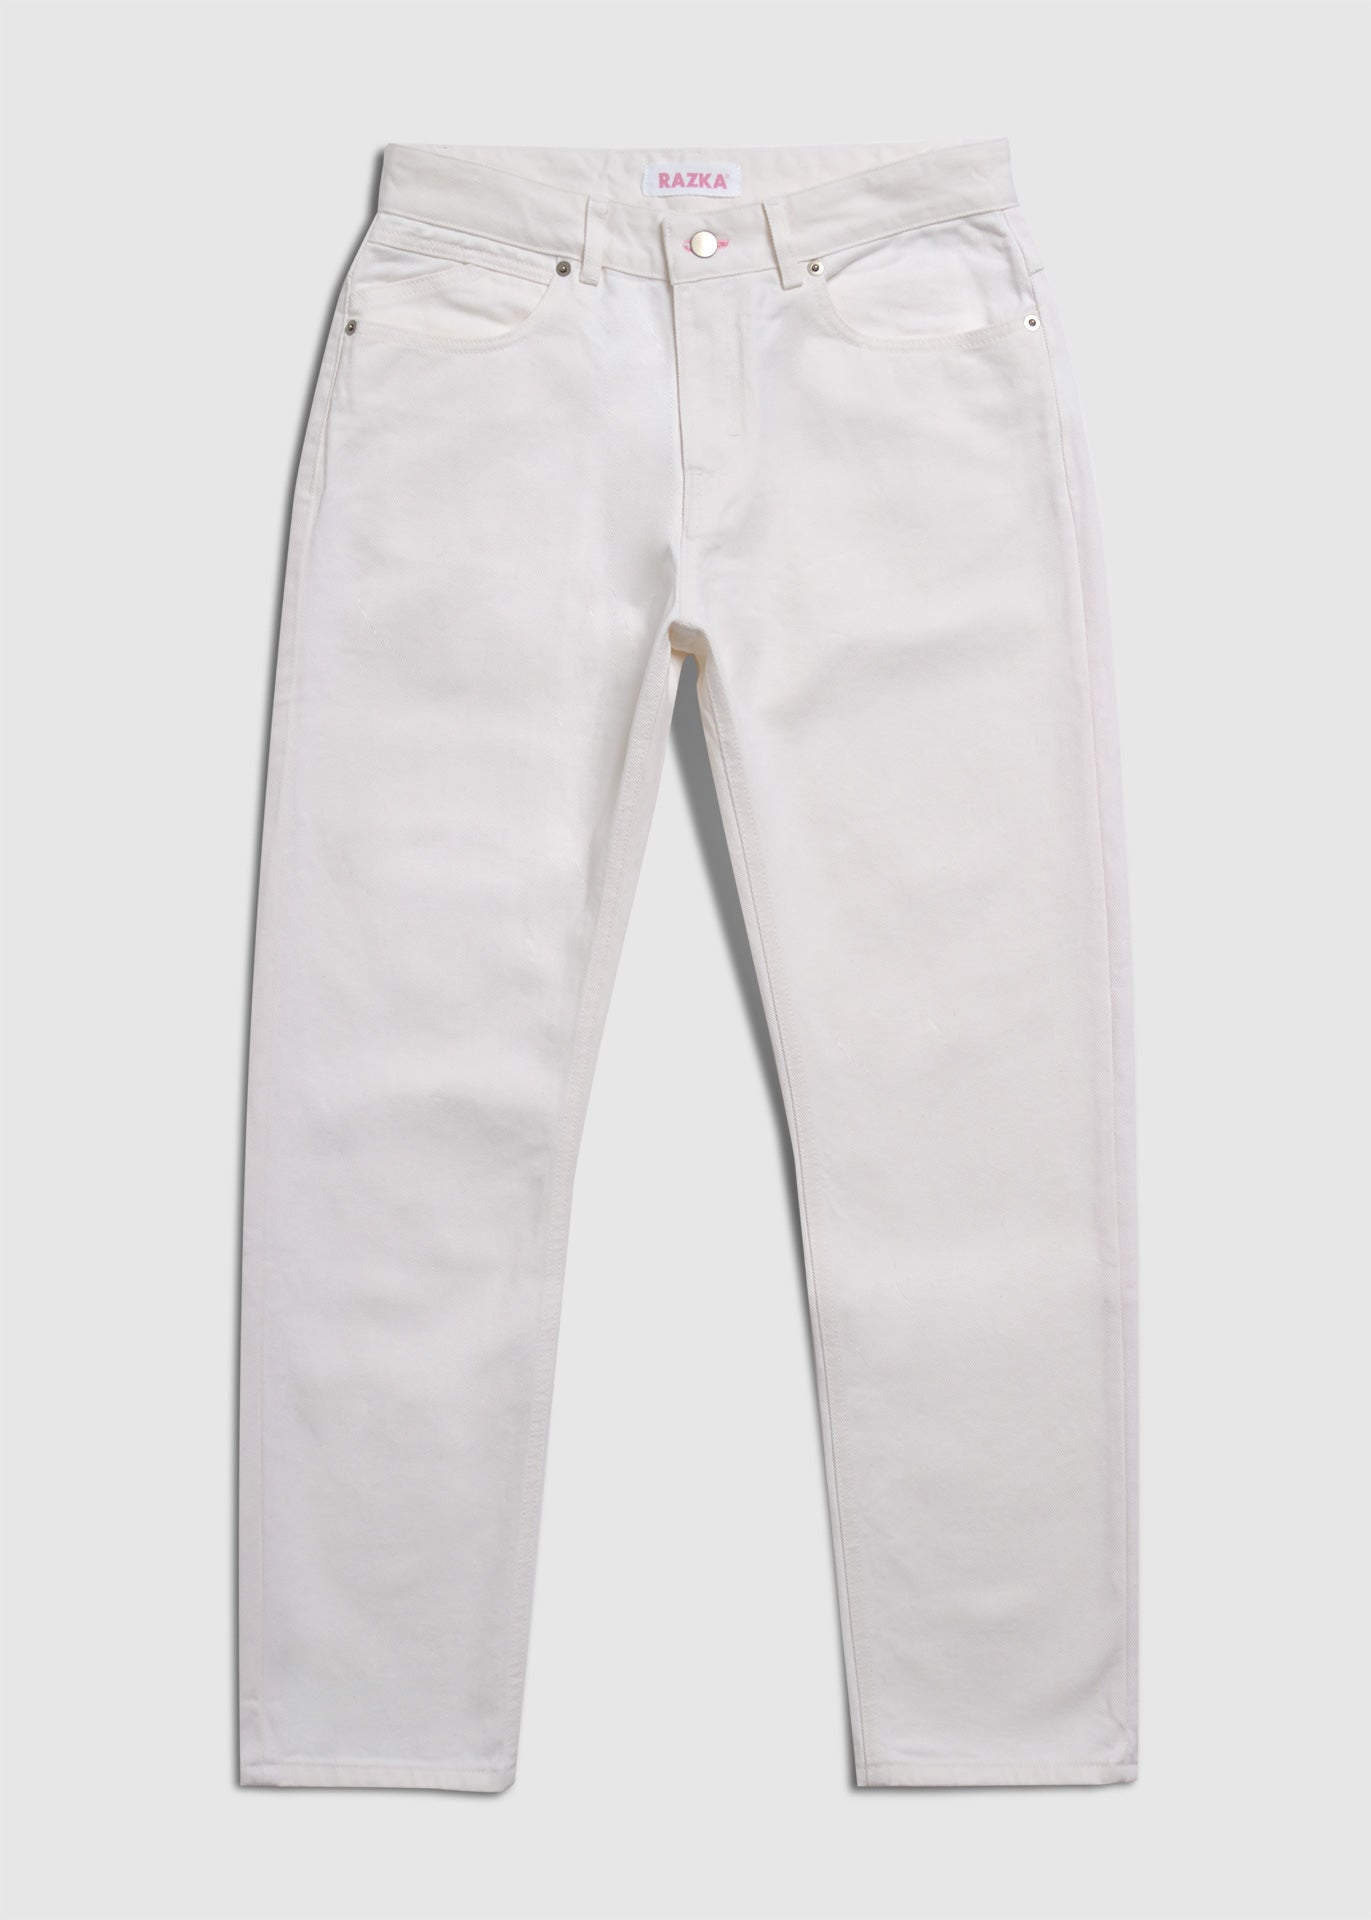 The White Jean